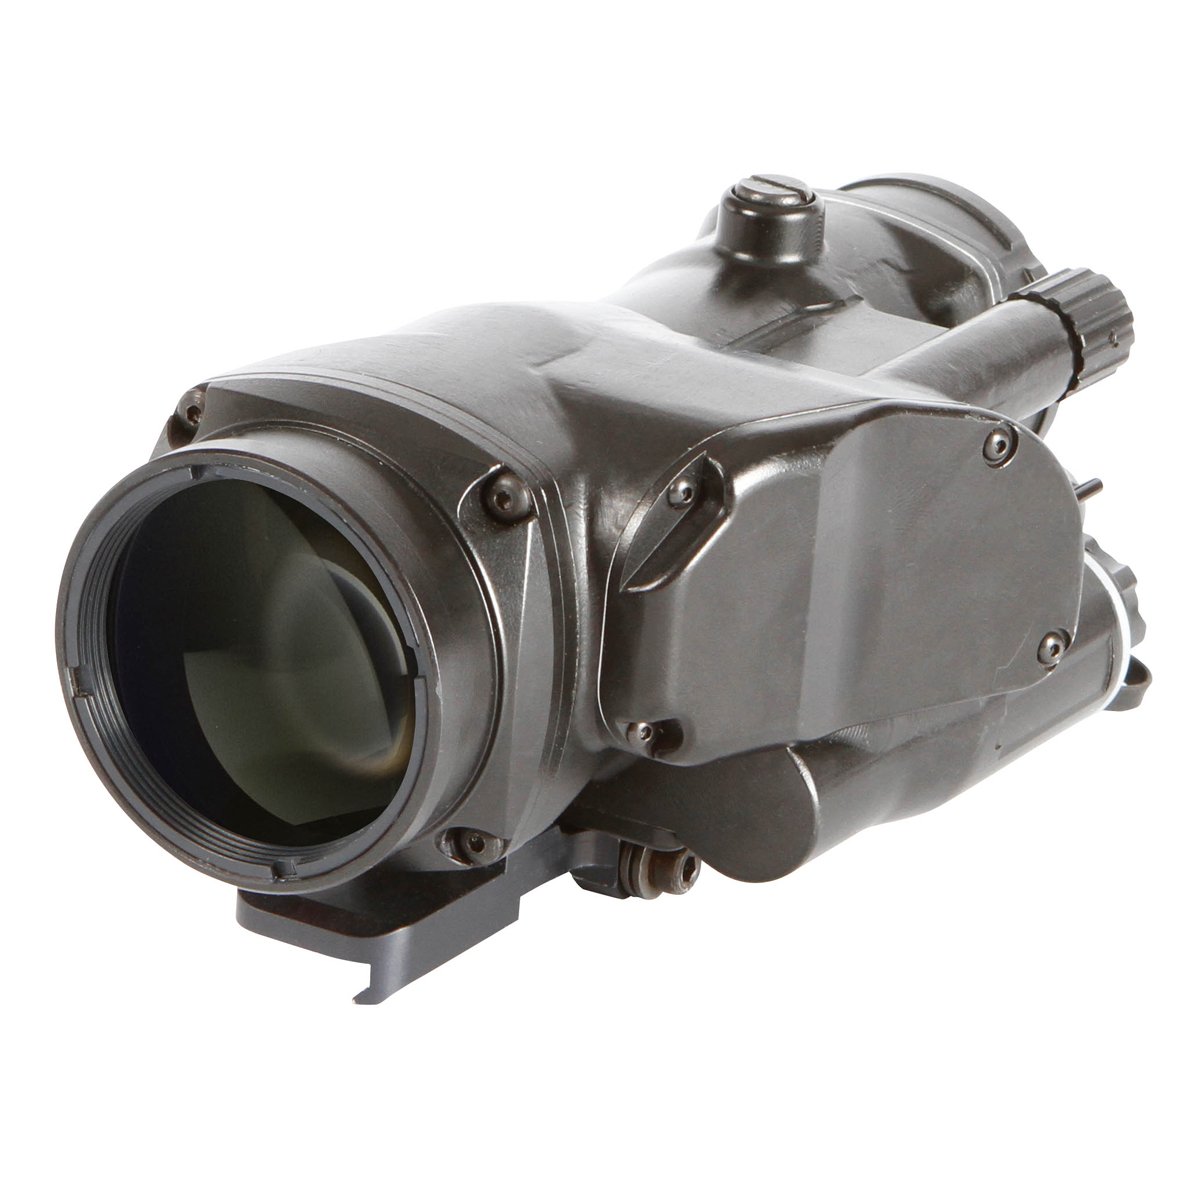 Multifunktionslichtverstärker (MPLI) Waffenfähiges In-Line-Nachtsichtgerät